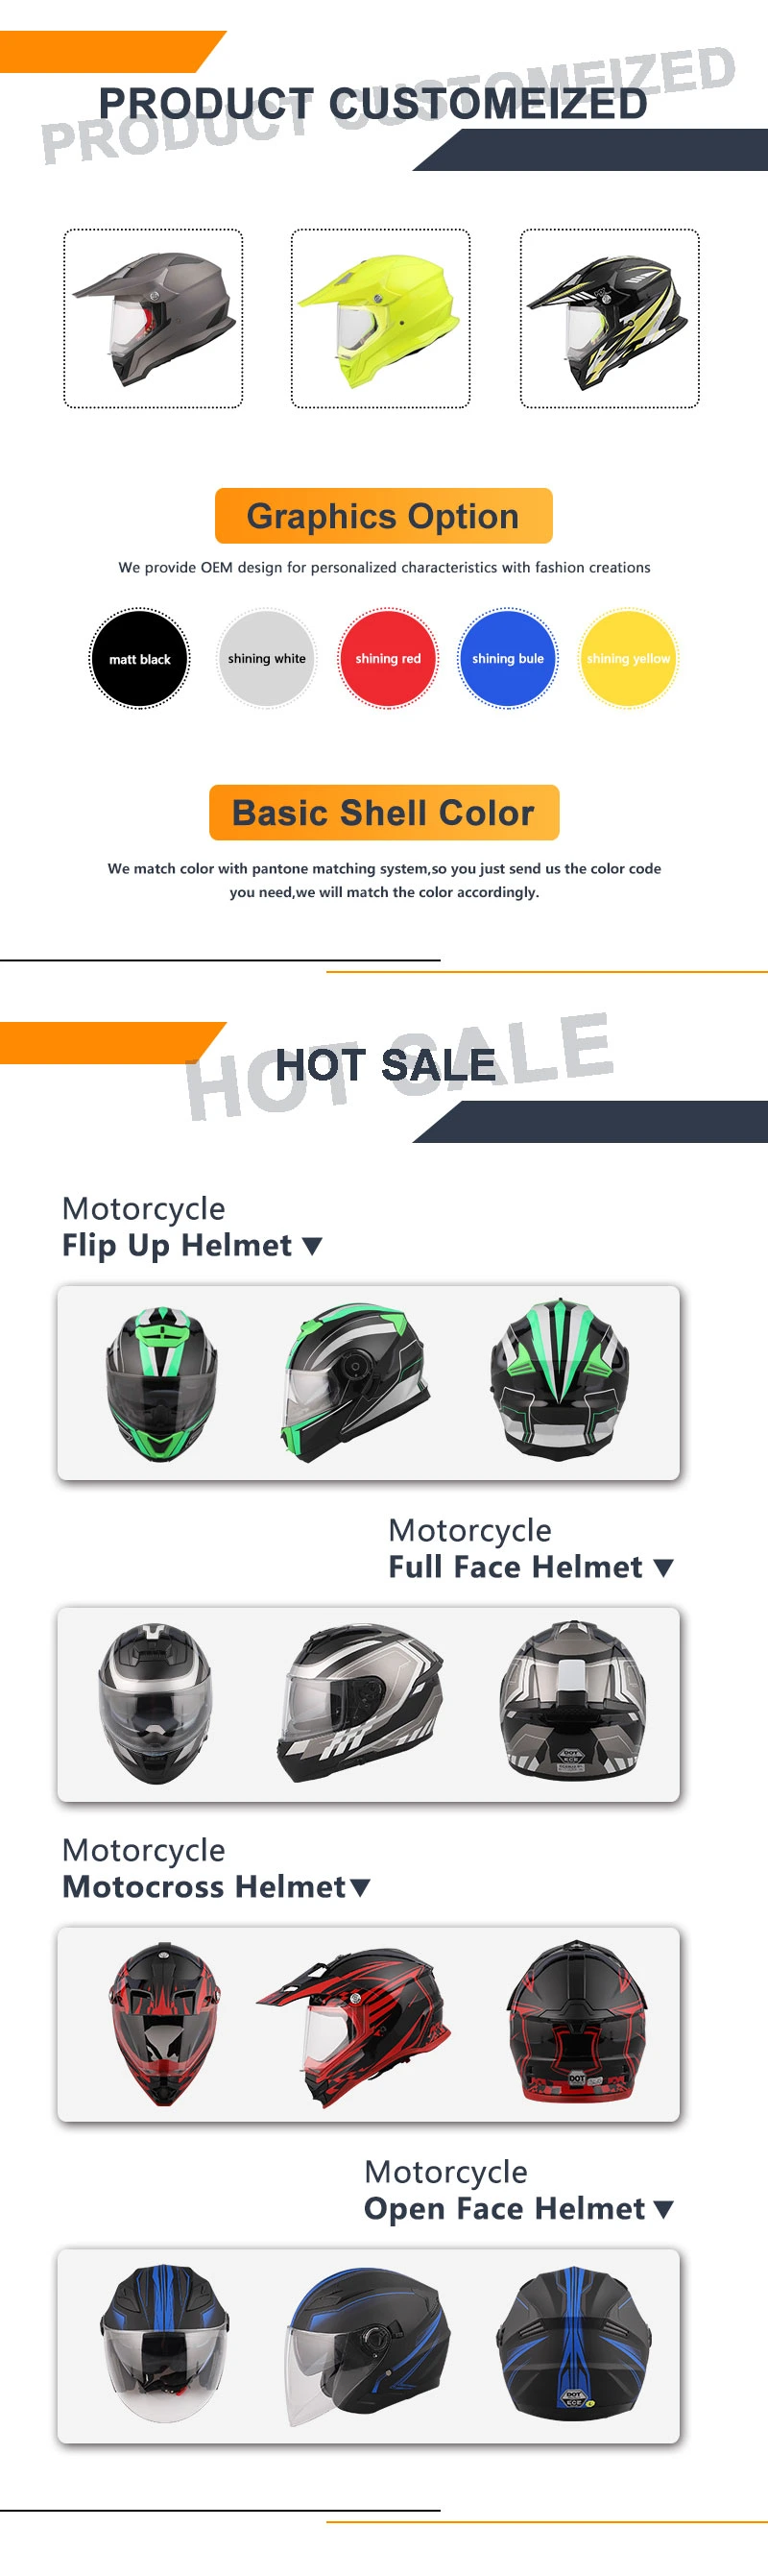 DOT Helmet Mx Racing Helmet Motorcycle Accessories Safety Full Face Helmets